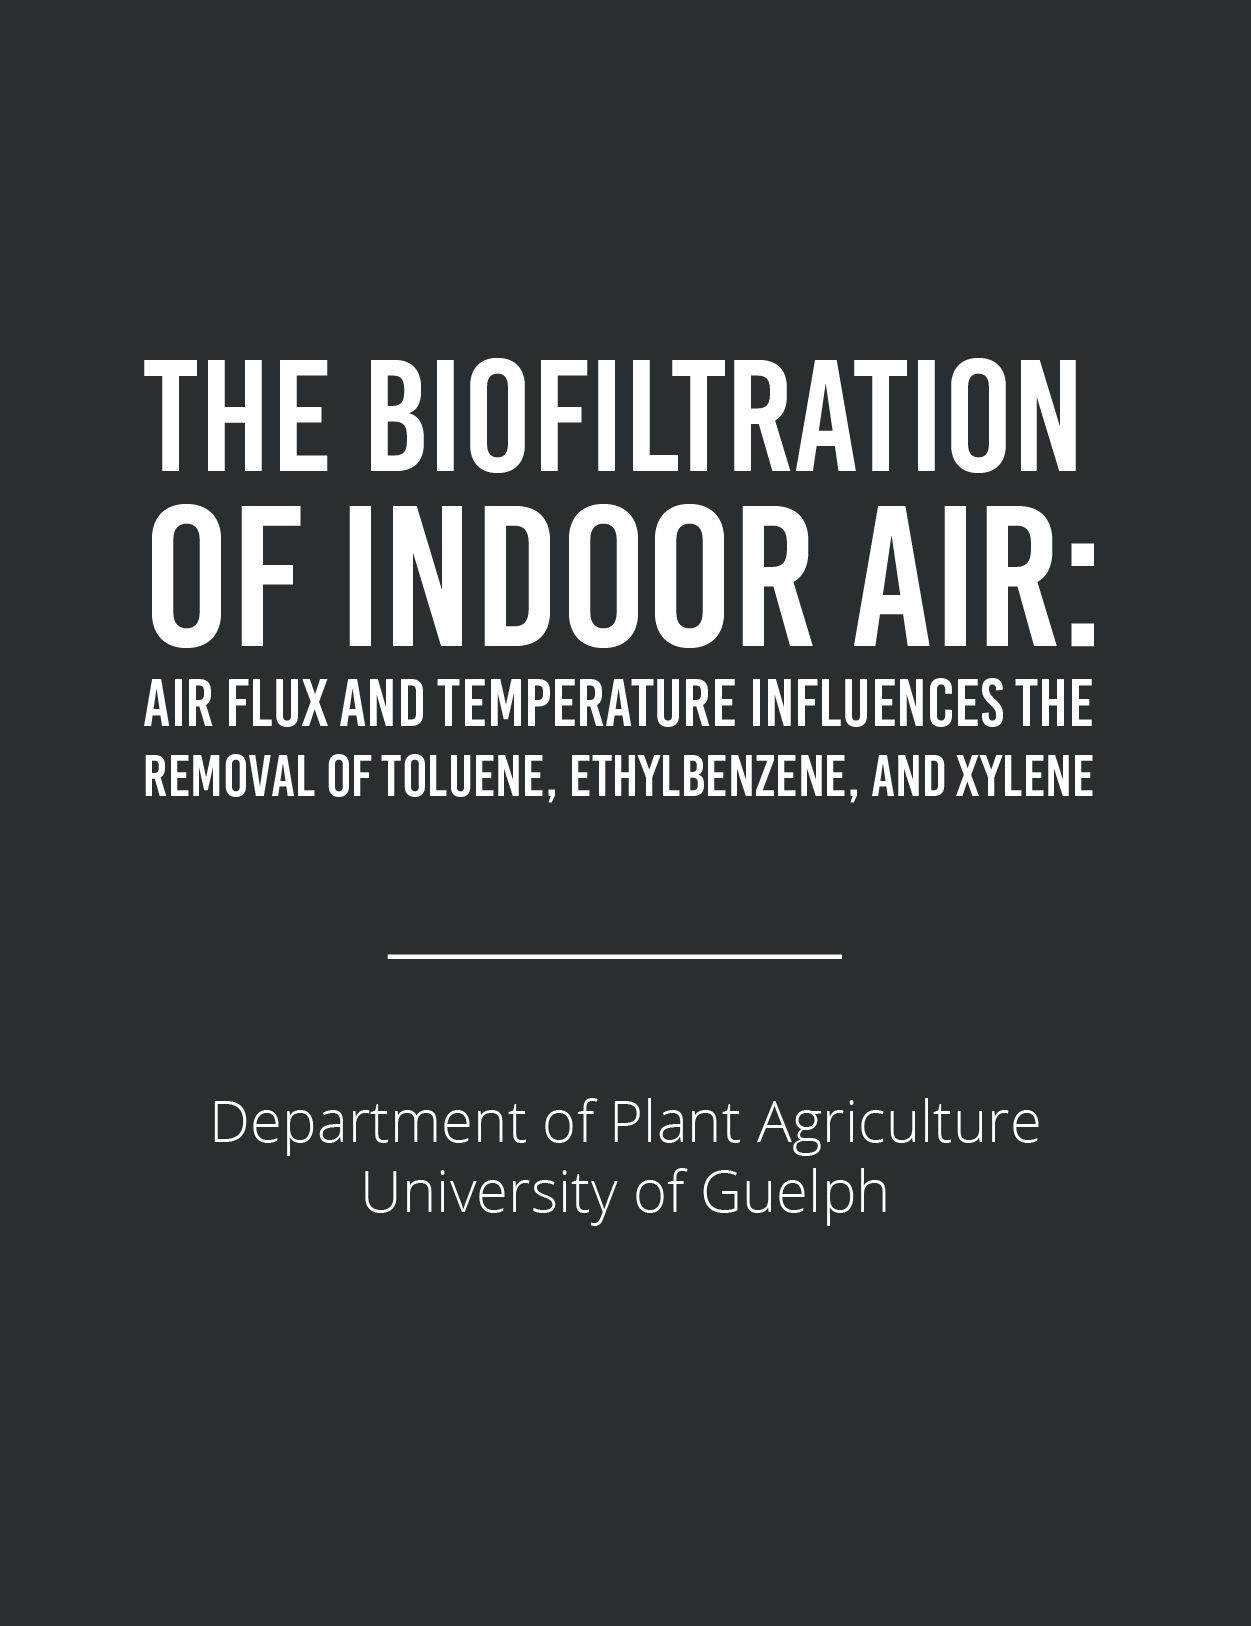 biofiltration of indoor air